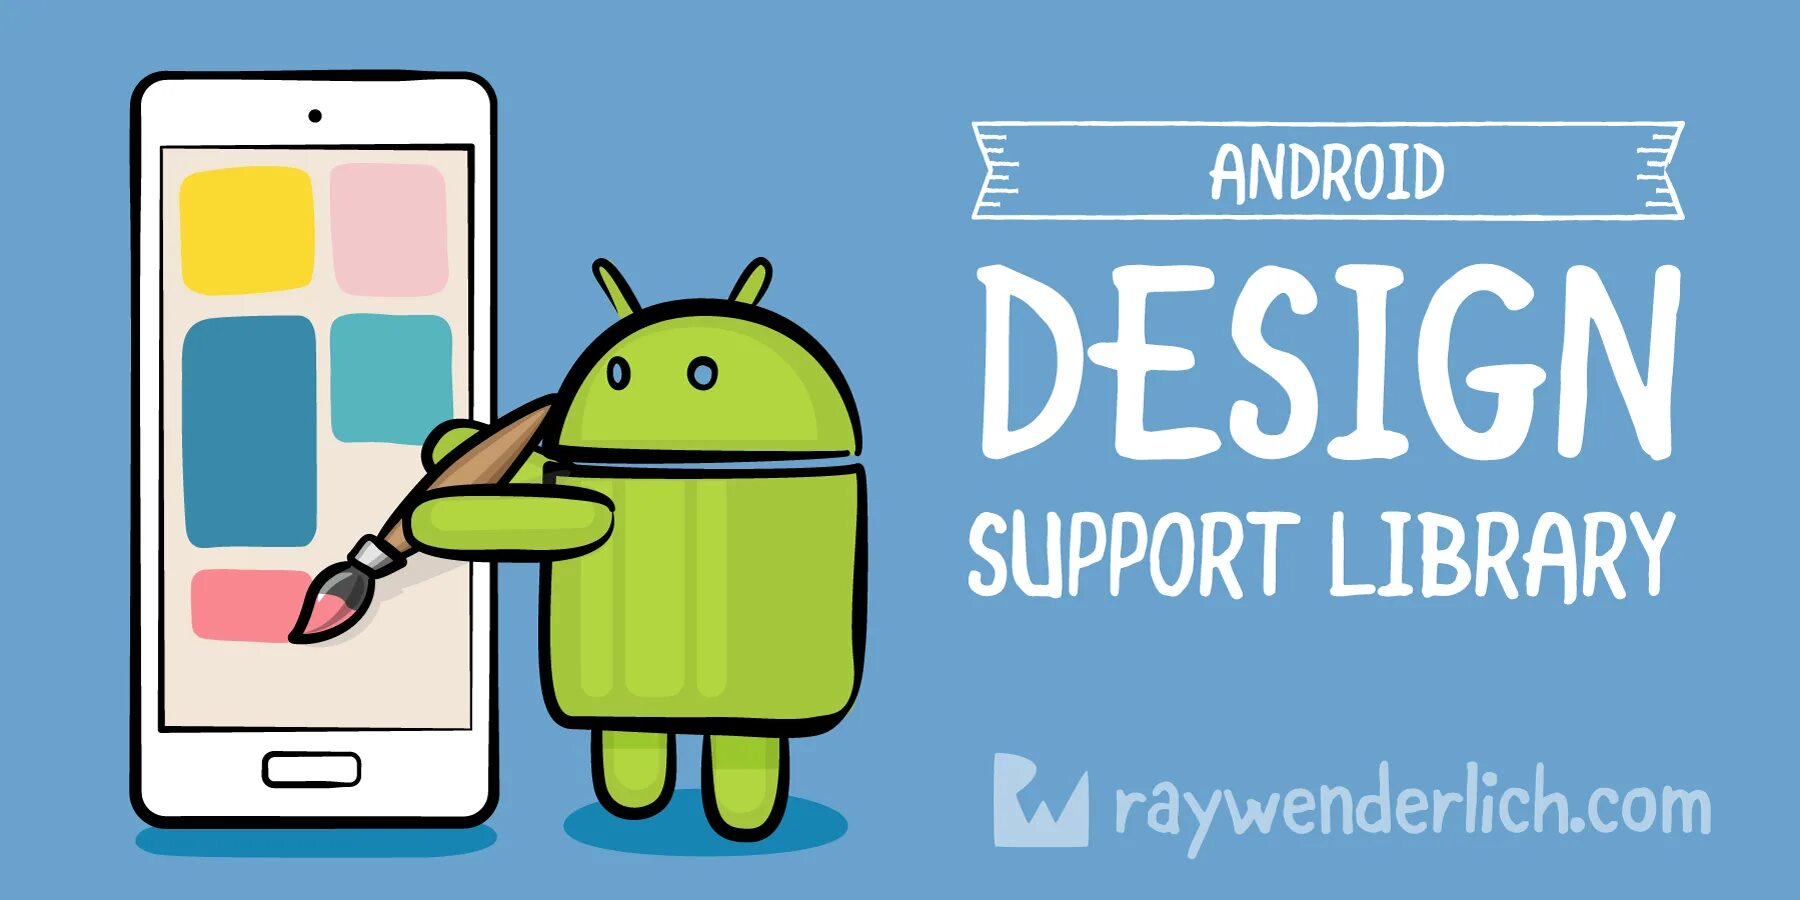 Android support Library. Android Design. Android дизайн ссылки. Модный дизайн андроид. Lib support